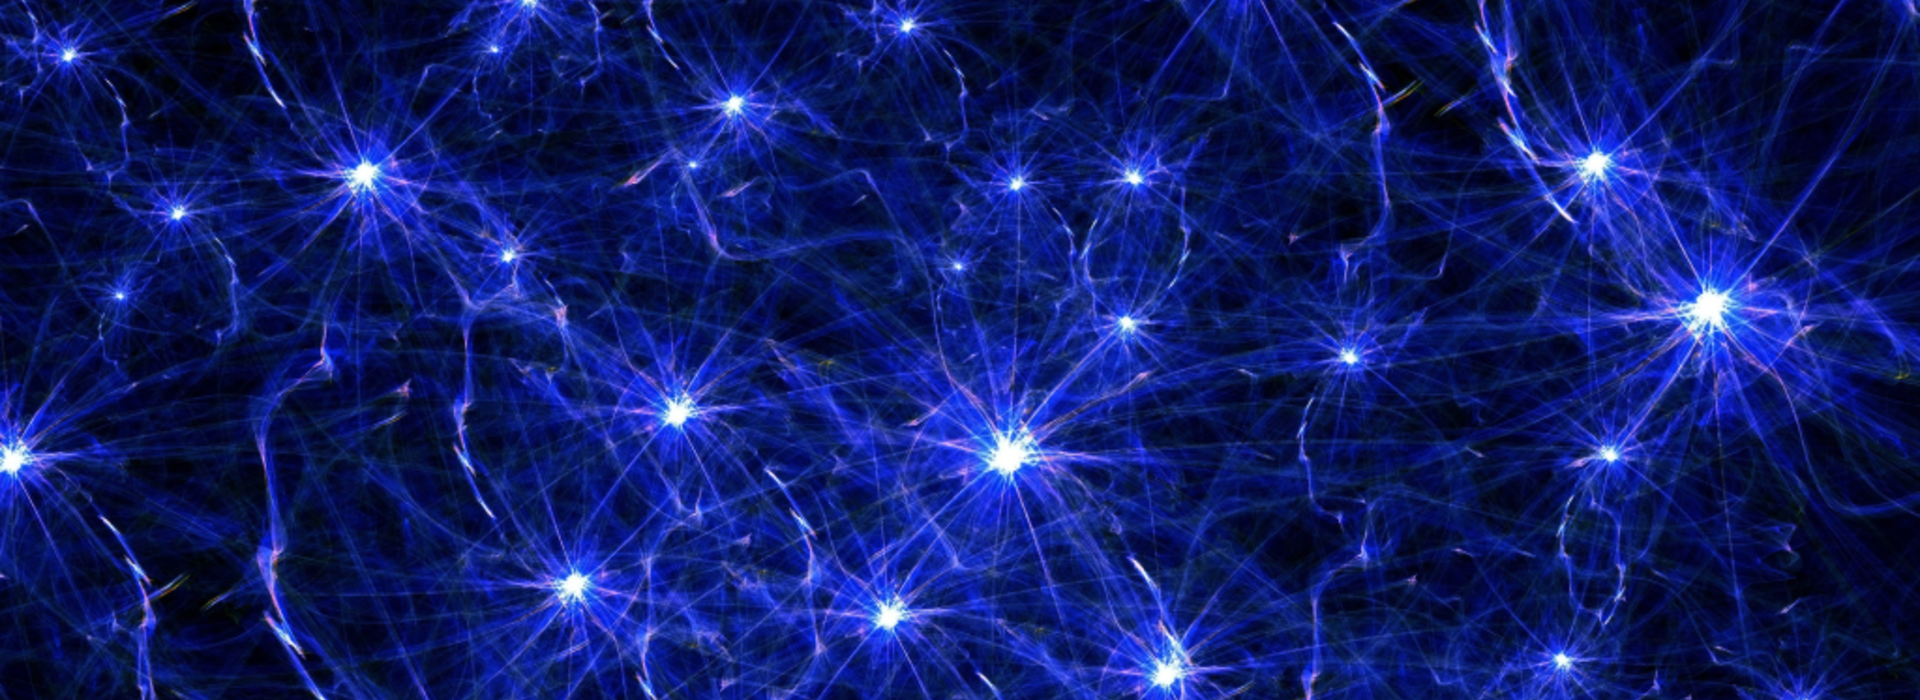 neurons image